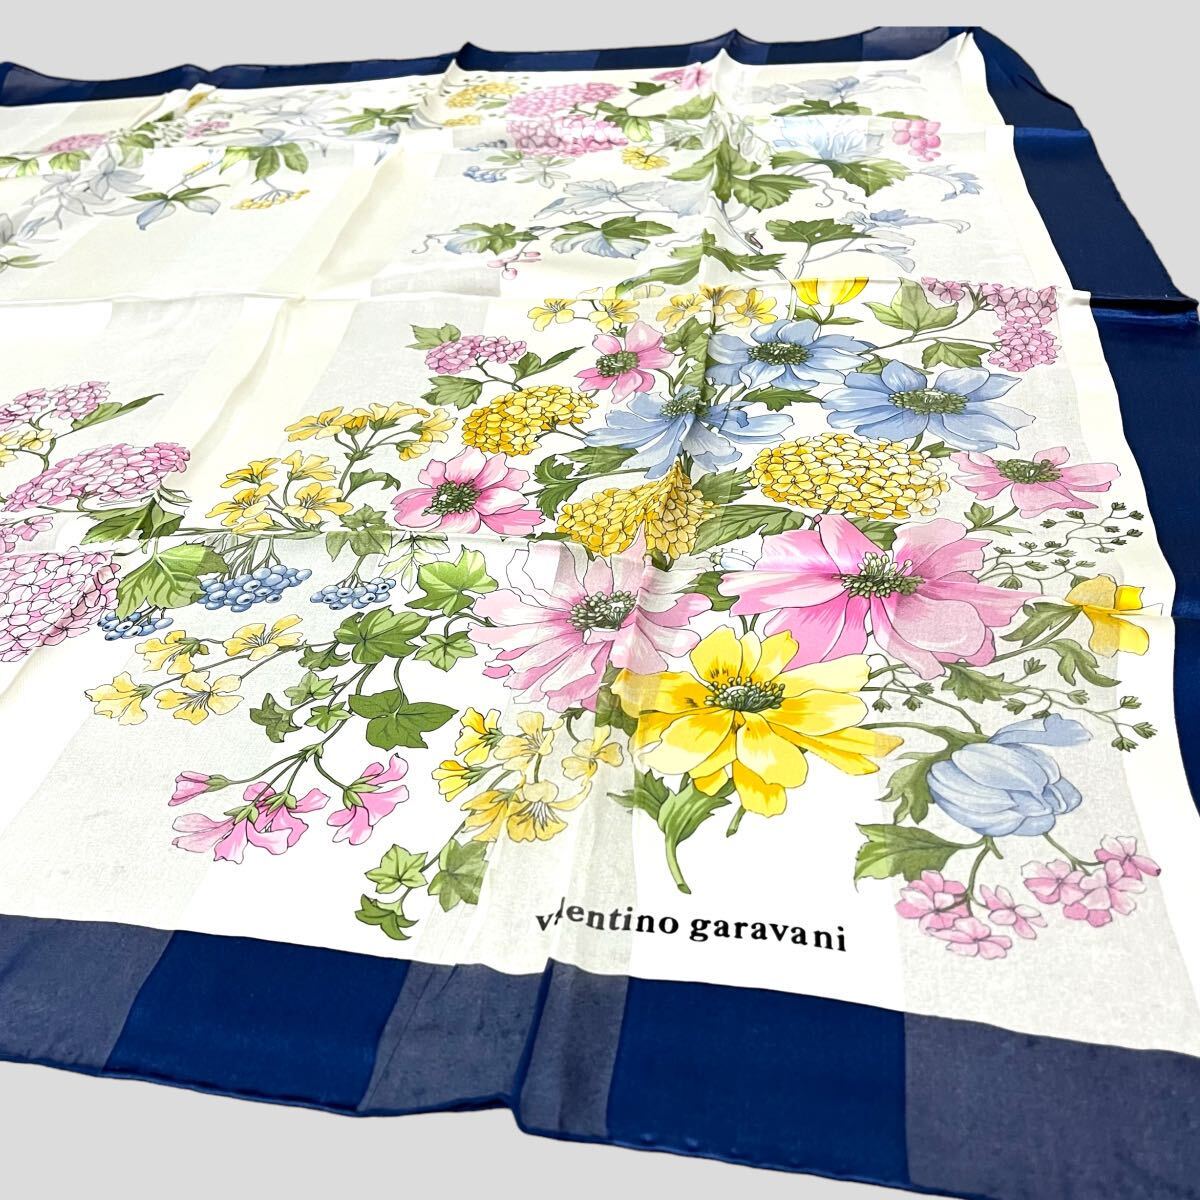 [ unused goods ]VALENTINO GARAVANI / Valentino galava-ni large size silk scarf stole shawl white group floral print Italy made 